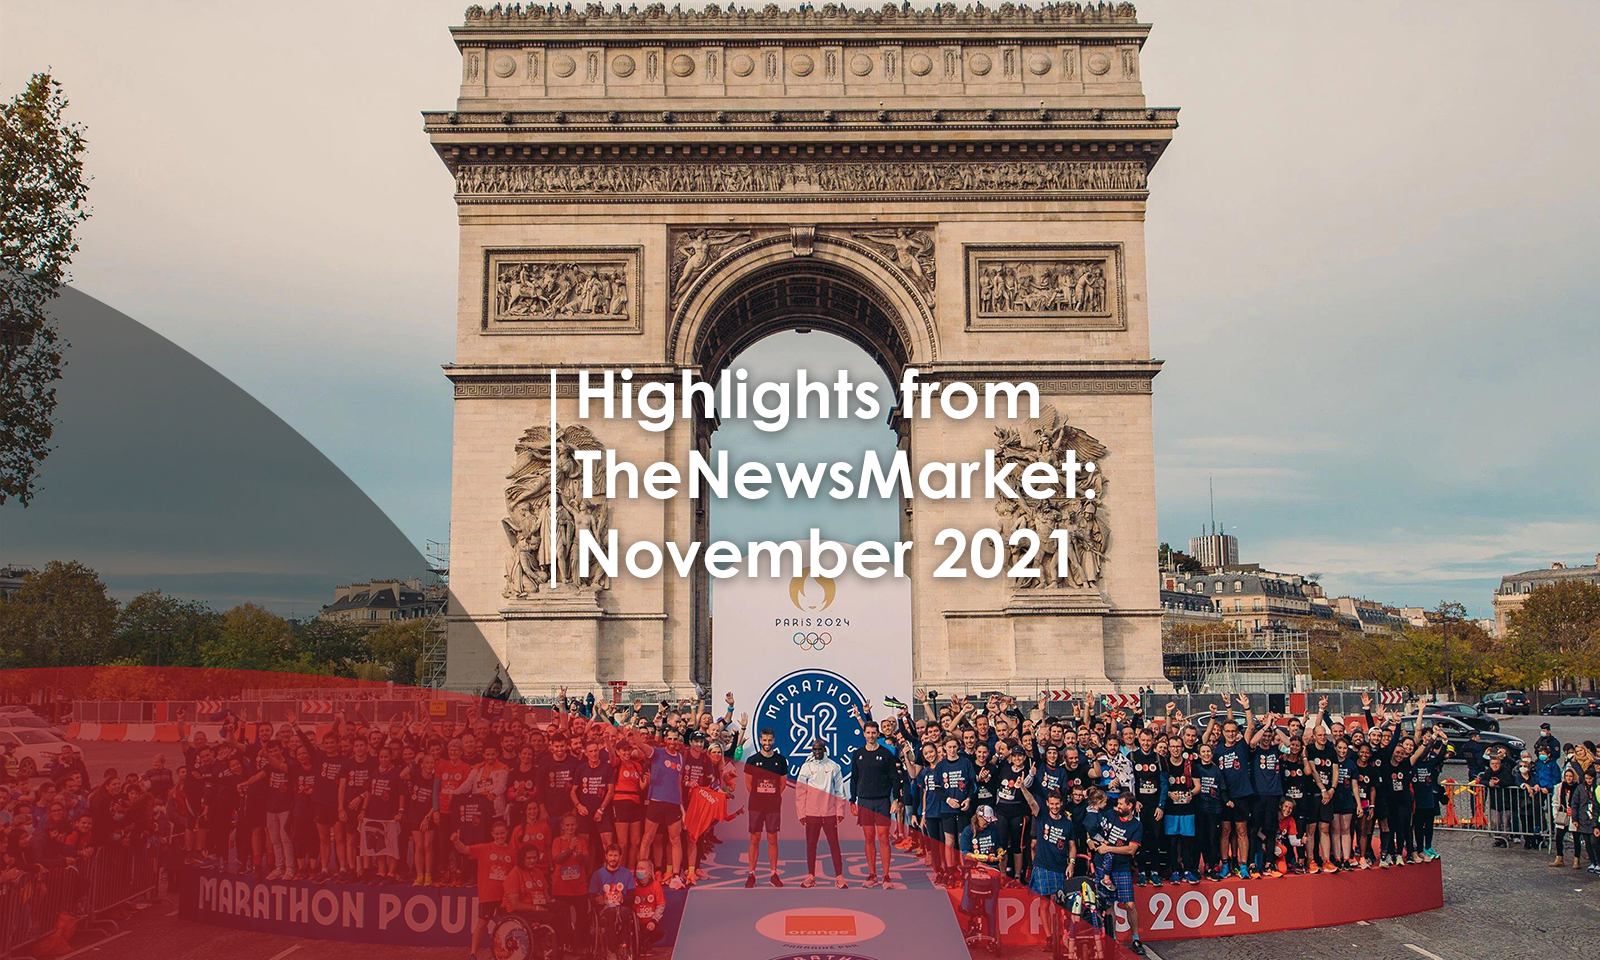 Highlights from TheNewsMarket: November 2021